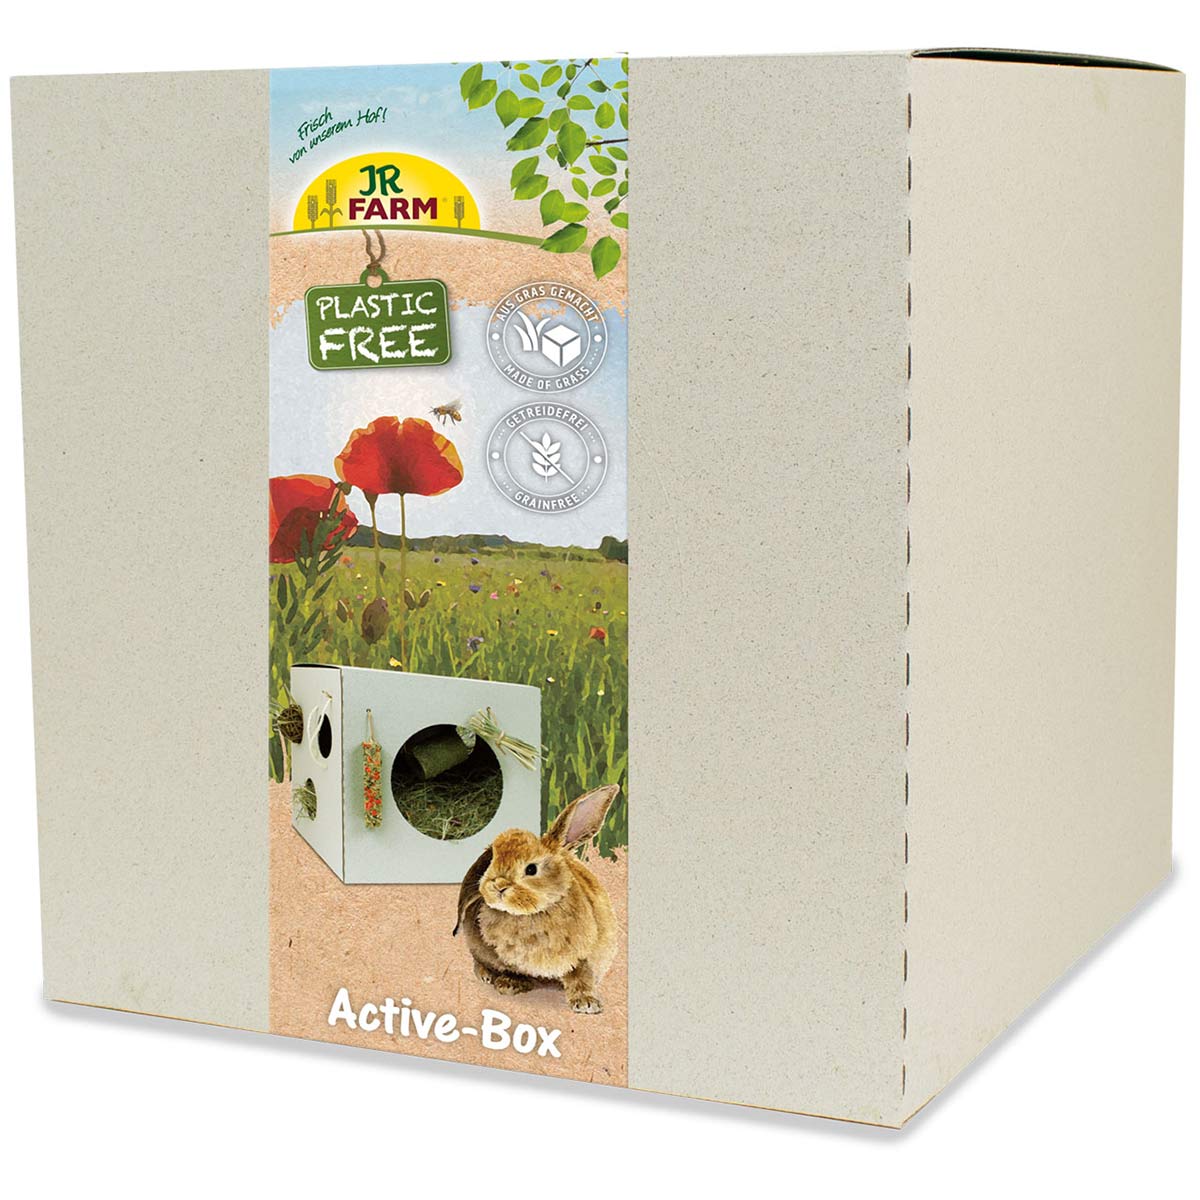 JR Farm PlasticFree Active-Box 1,1kg von JR Farm